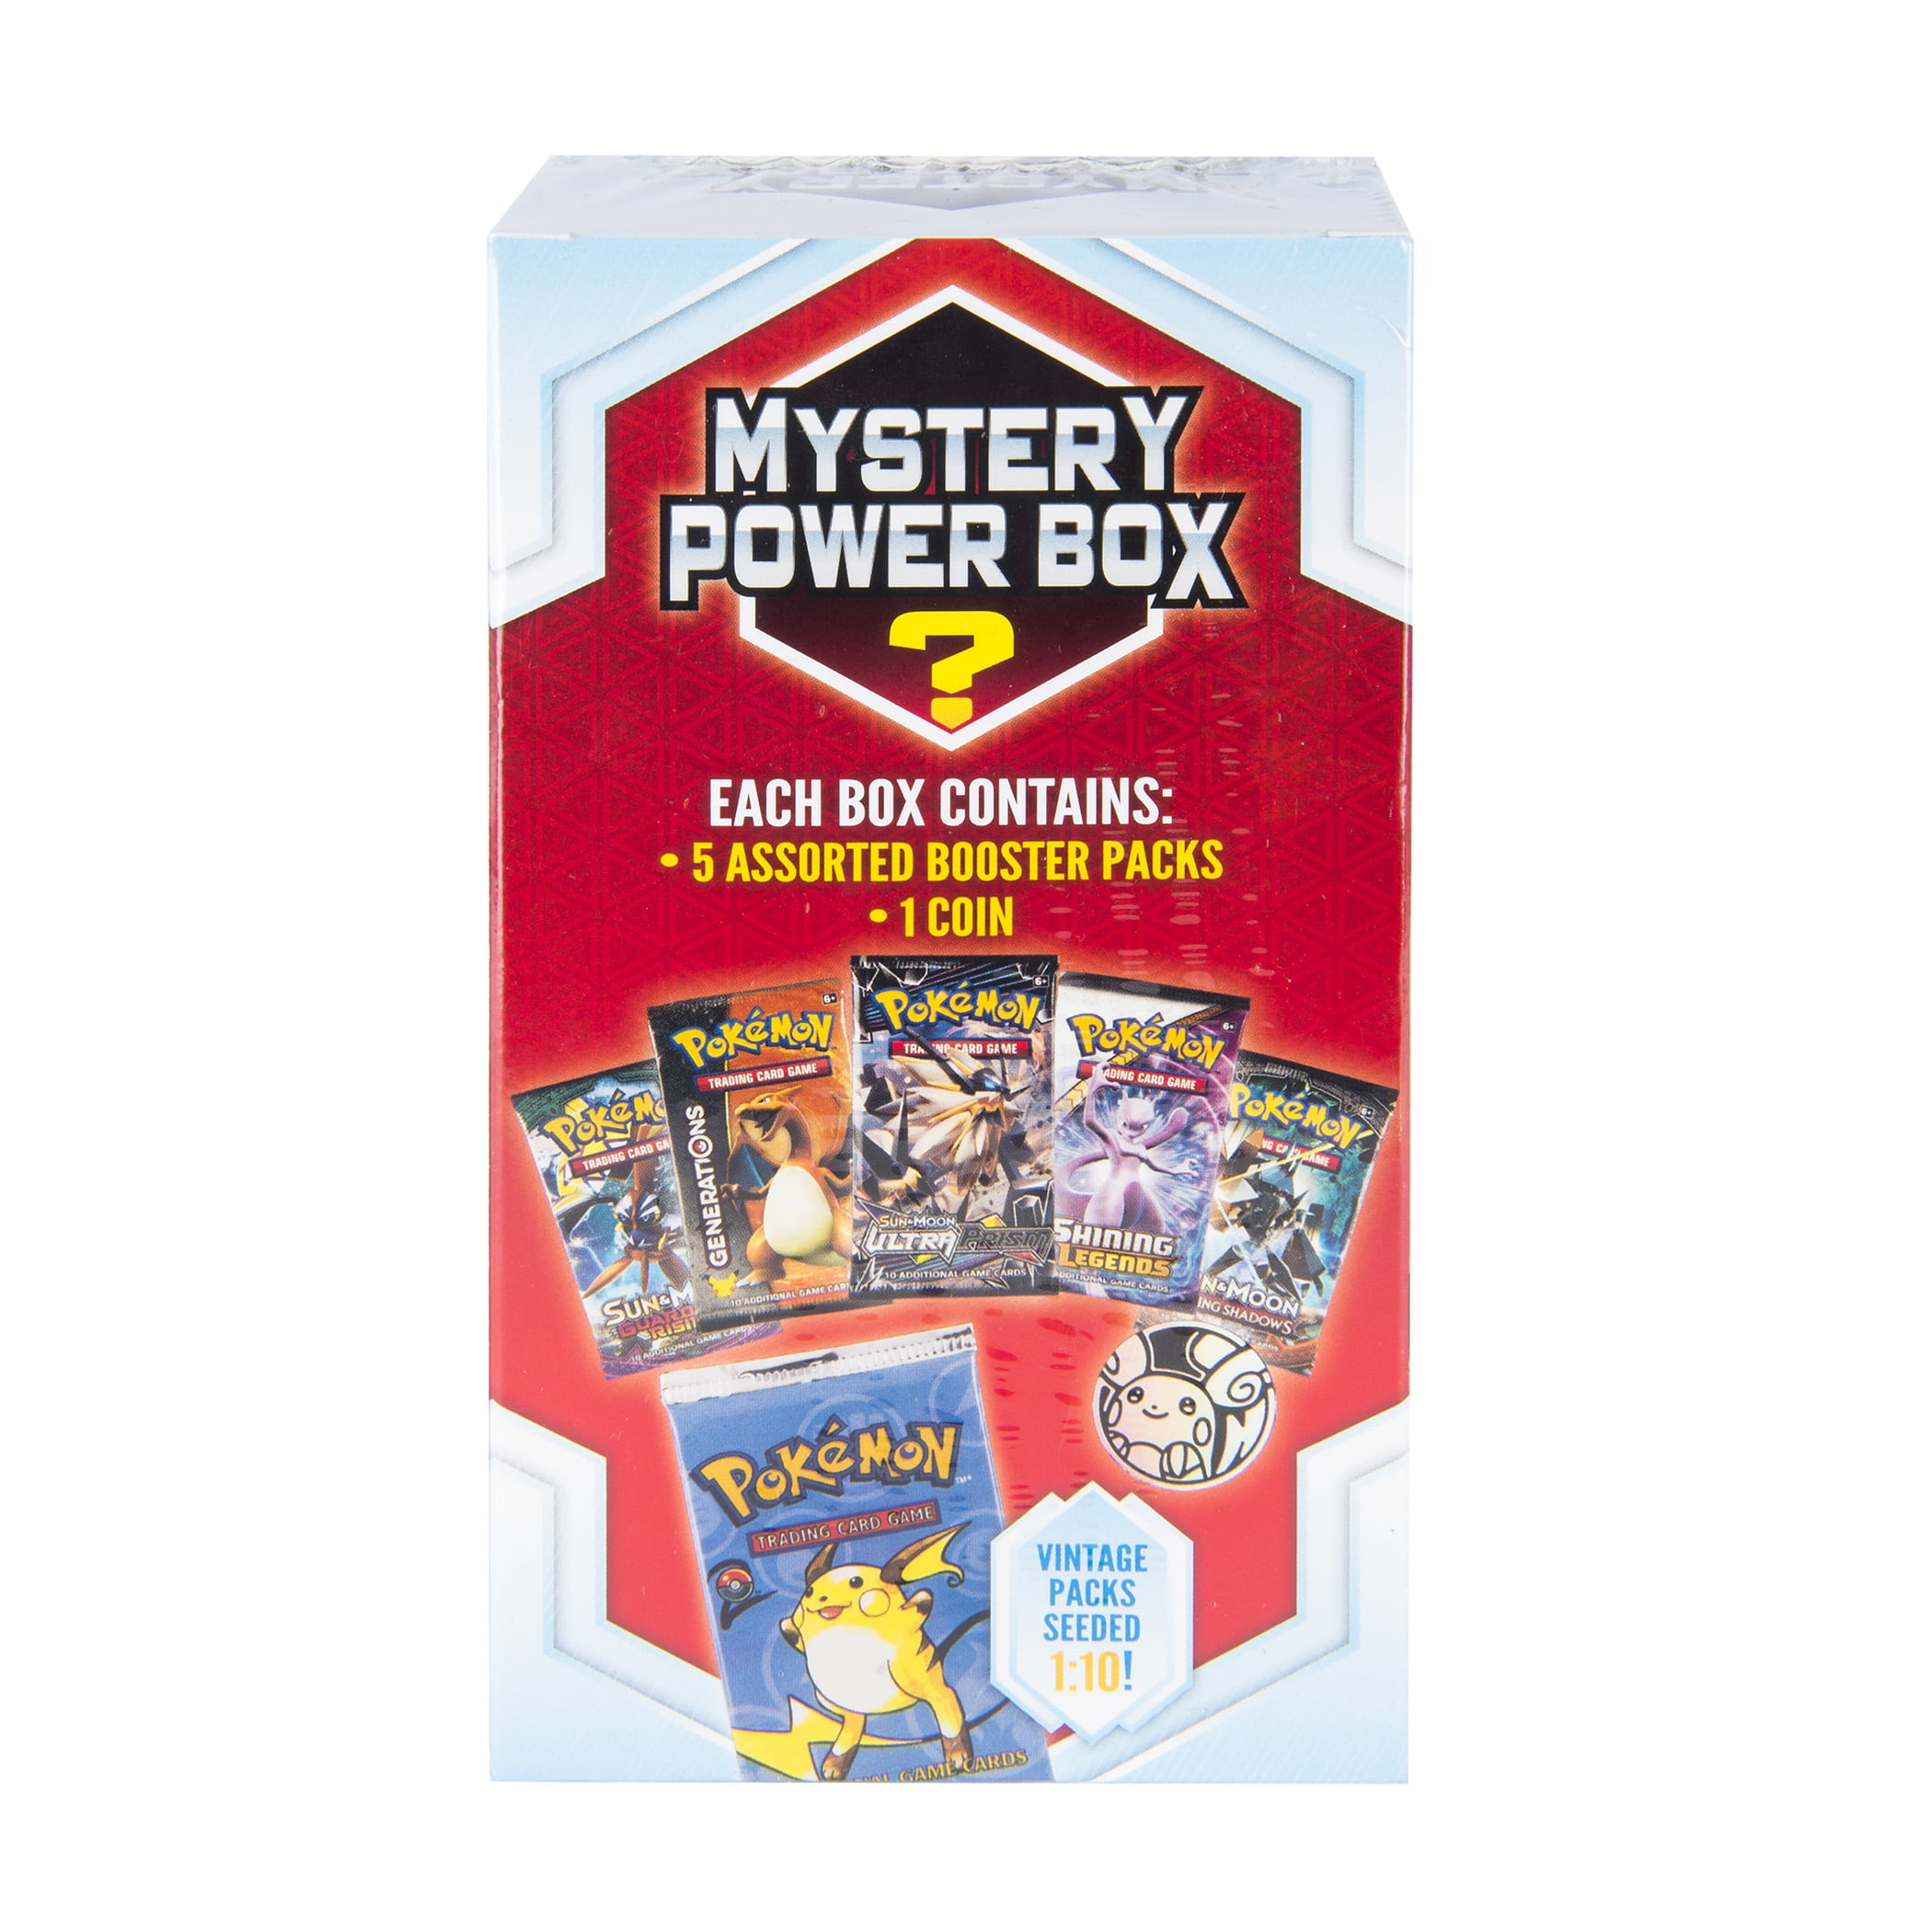 2020 Fast Ship New Pokemon Mystery Power Box 5 Booster Packs Vintage Packs